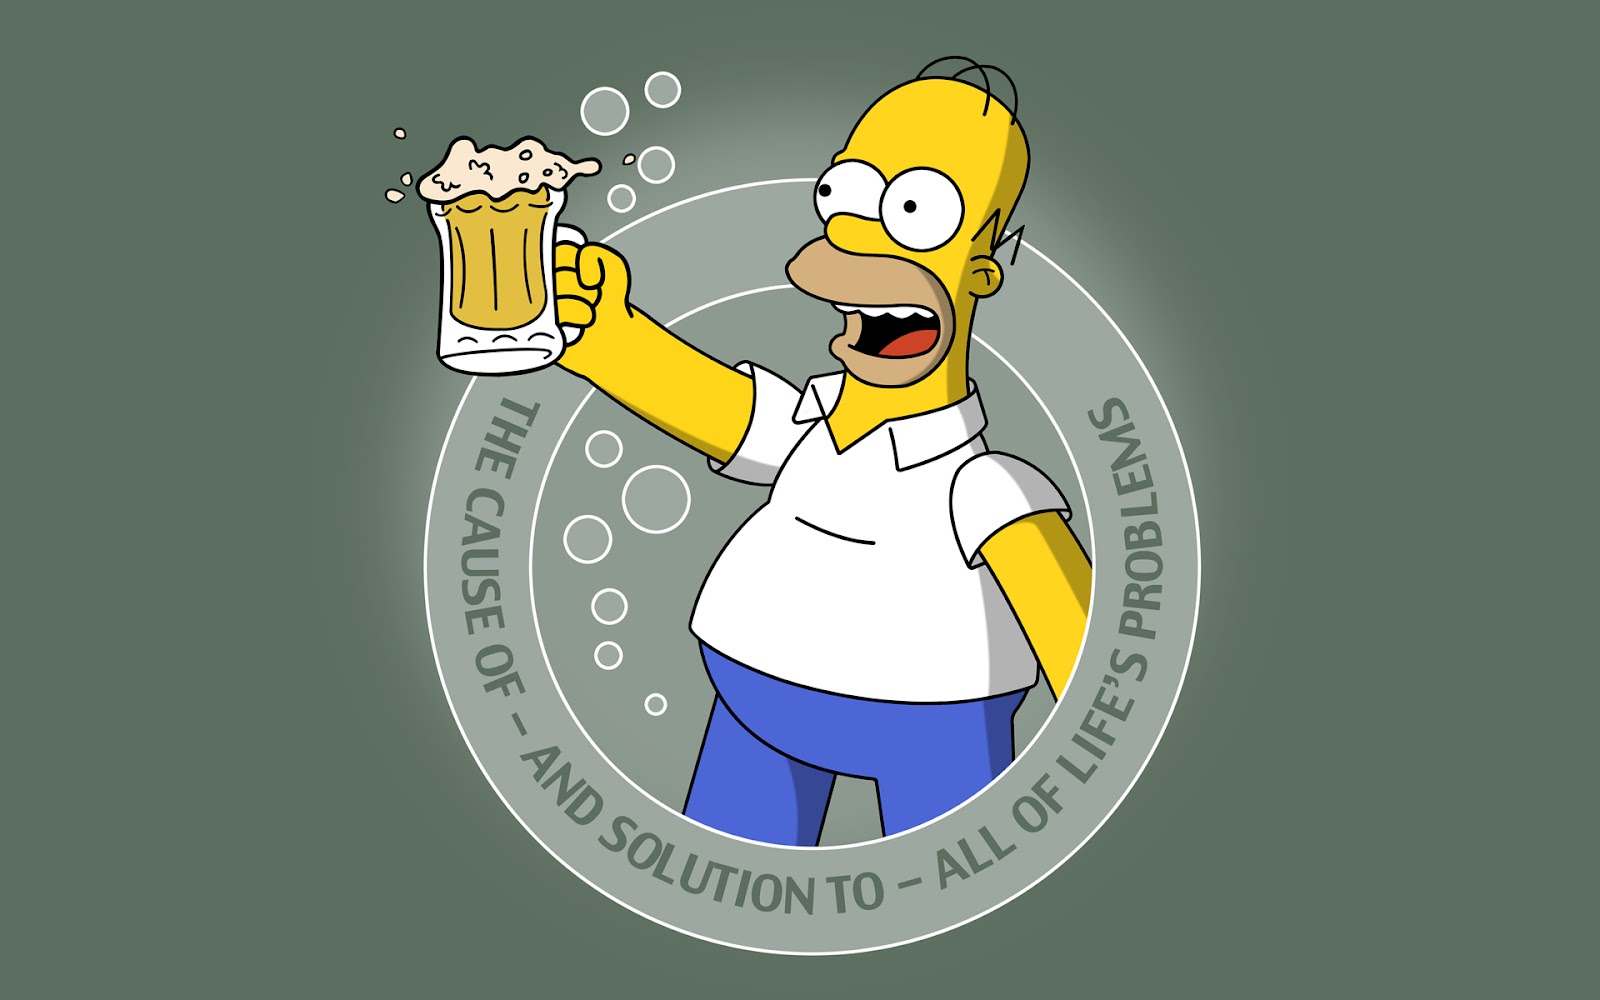 https://blogger.googleusercontent.com/img/b/R29vZ2xl/AVvXsEj4rkD4TK9RlzUU9RfOEEj2NUQ75bt8pGajUX2wMC08h8ufZl3fqIqGodLgPaeIj4sf3p6VtrZkCNcLxYzCIfPacsAvwR44wb0KRfx75_eczfDmnCalKERQBIk1MrdXScz9cMDFf_j1qvk/s1600/Homero-Simpson_The-Simpsons_02.jpg